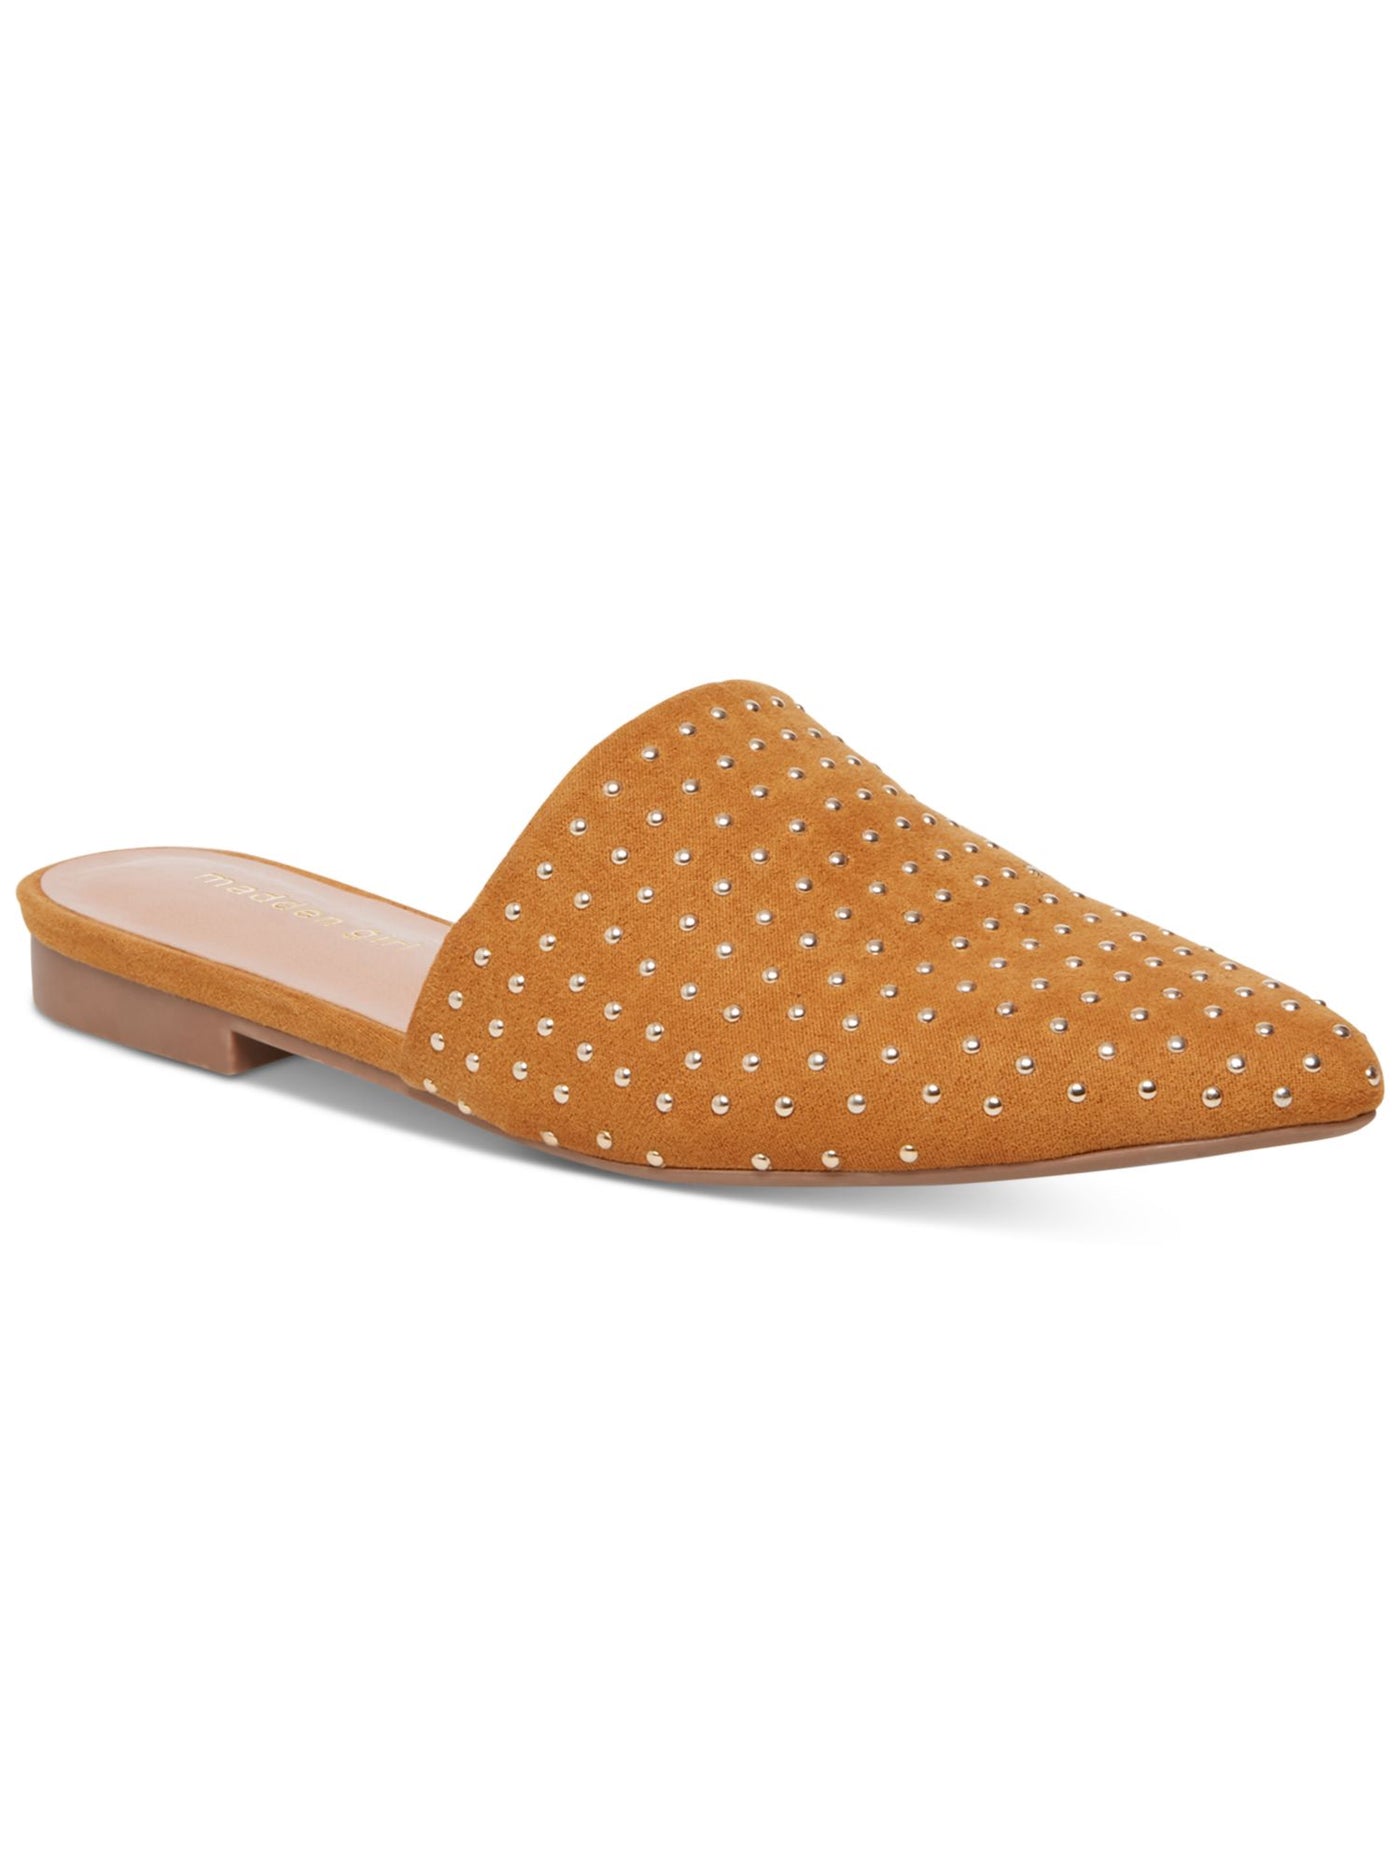 MADDEN GIRL Womens Orange Studded Cushioned Tania Pointed Toe Block Heel Slip On Mules 8 M